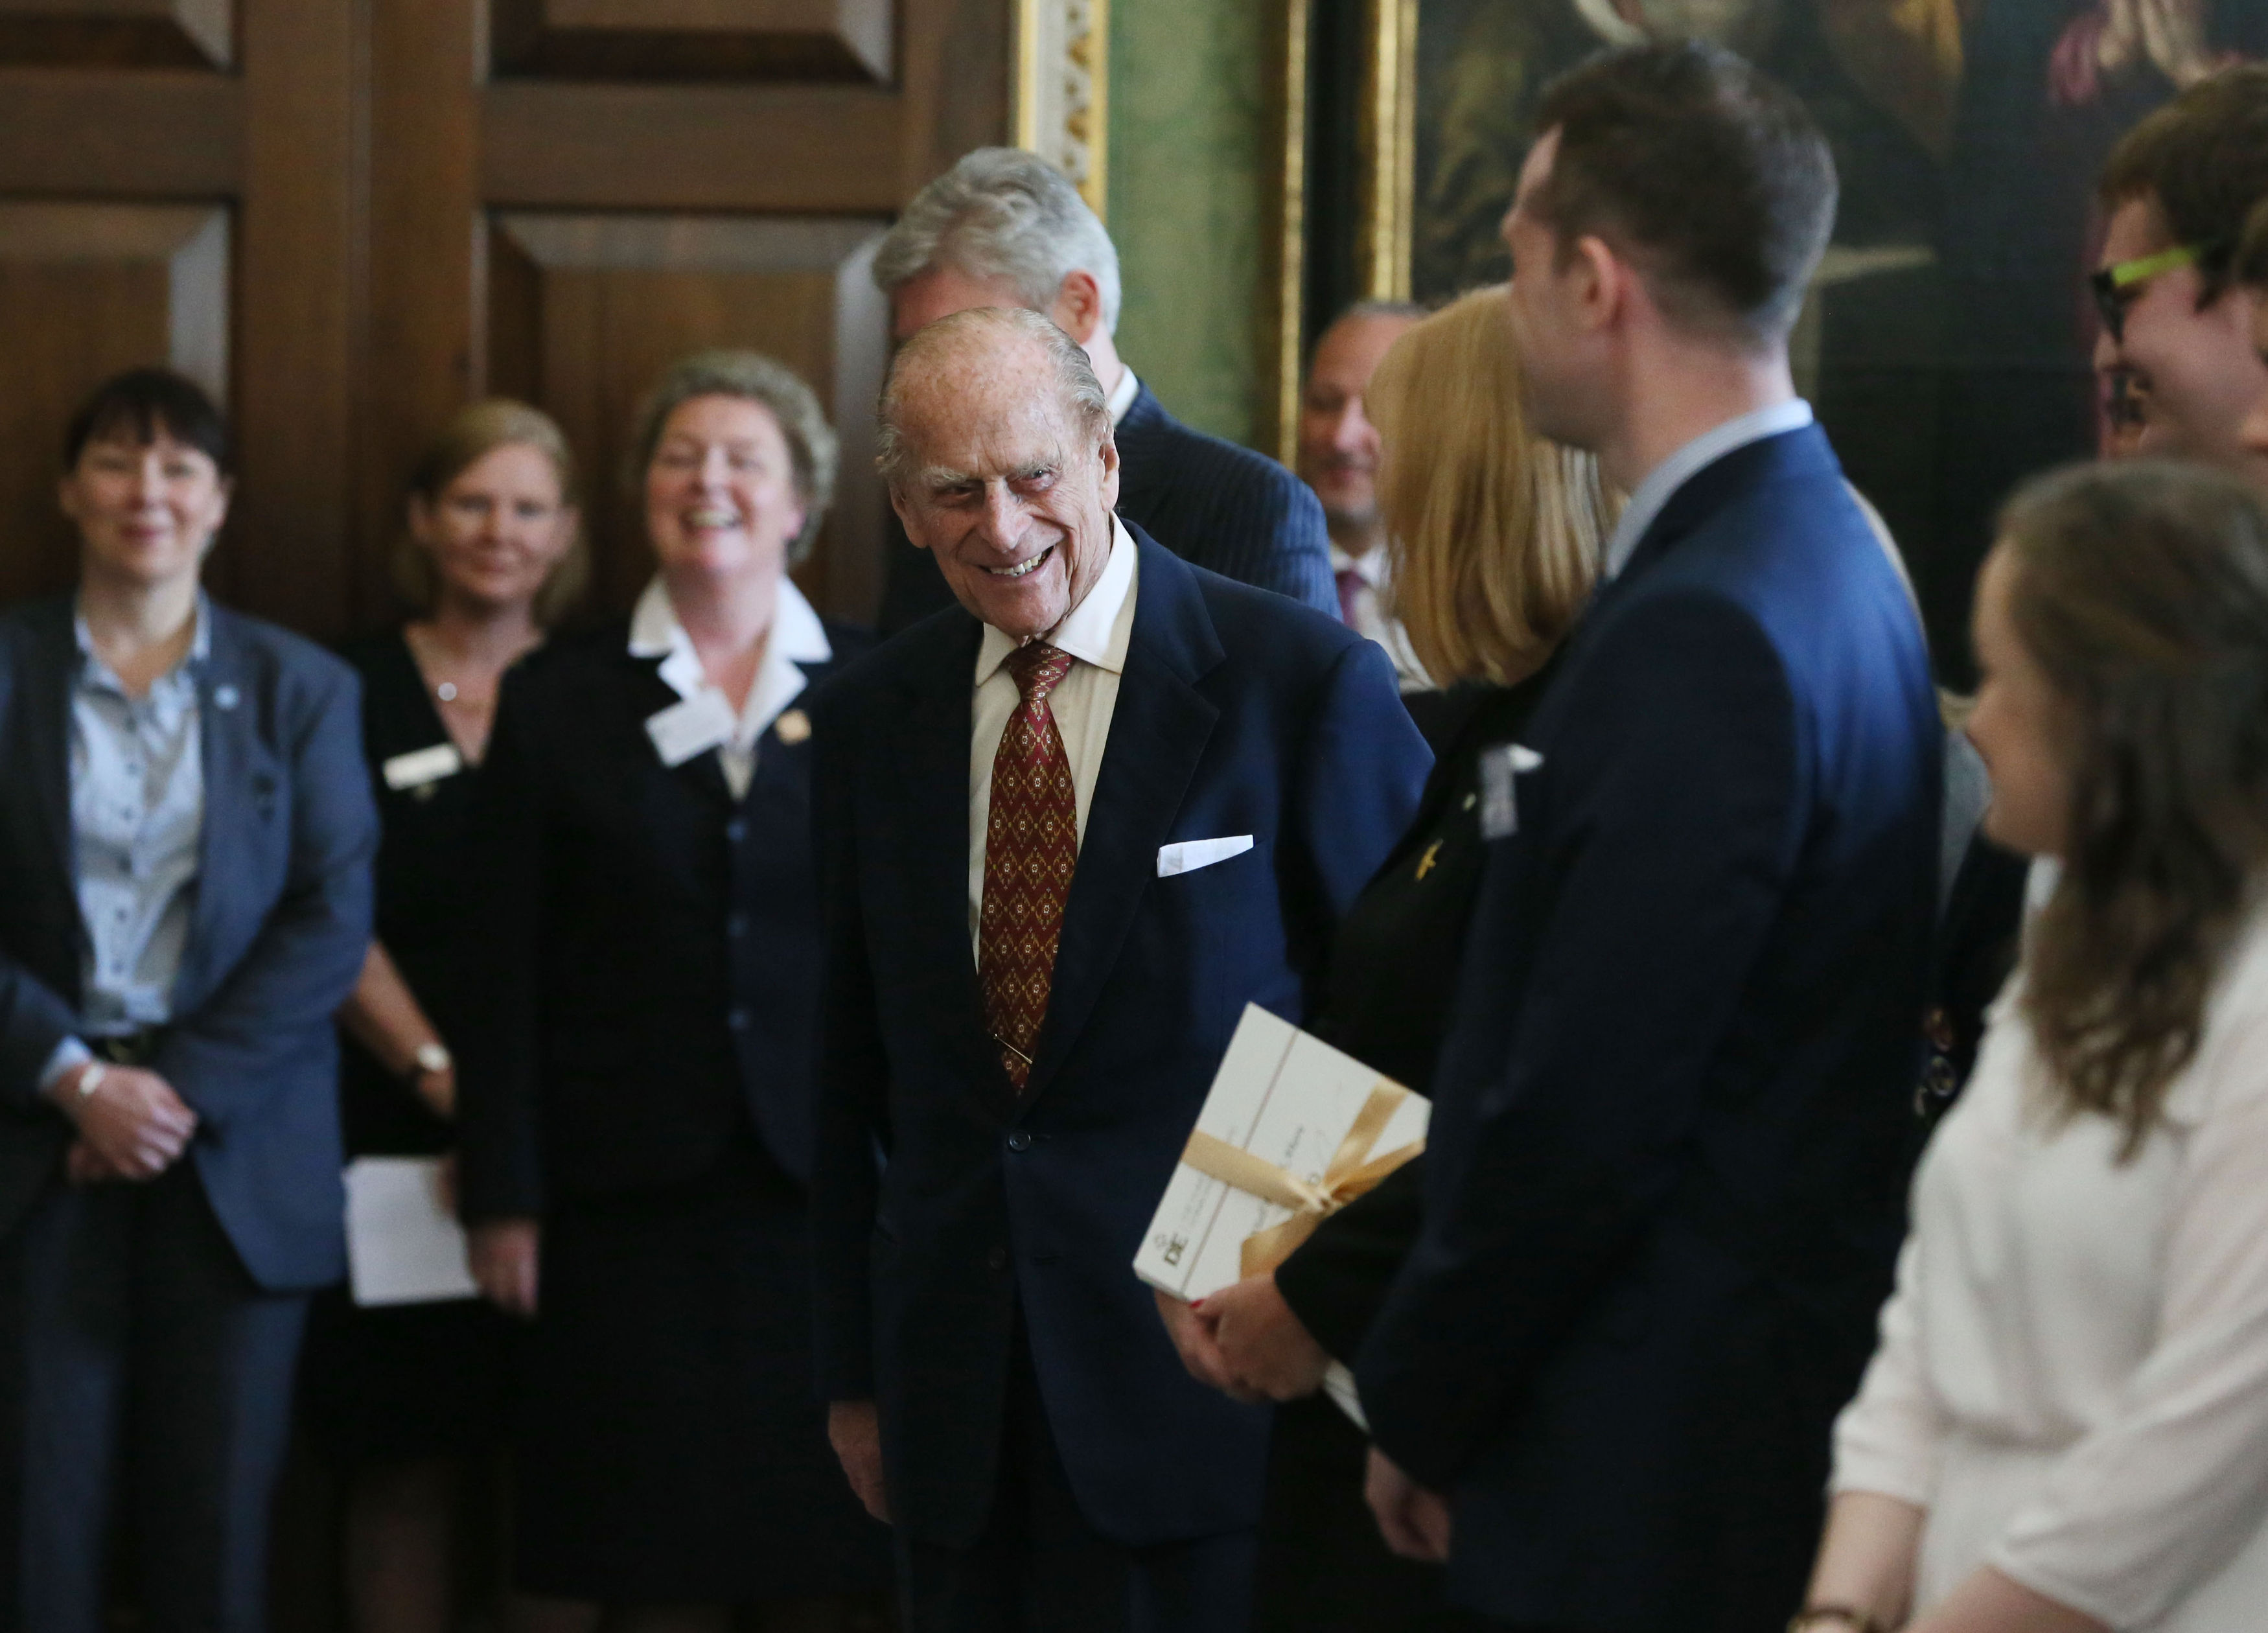 The Duke of Edinburgh hosts a Duke of Edinburgh's Gold Award reception at Hillsborough Castle, Northern Ireland